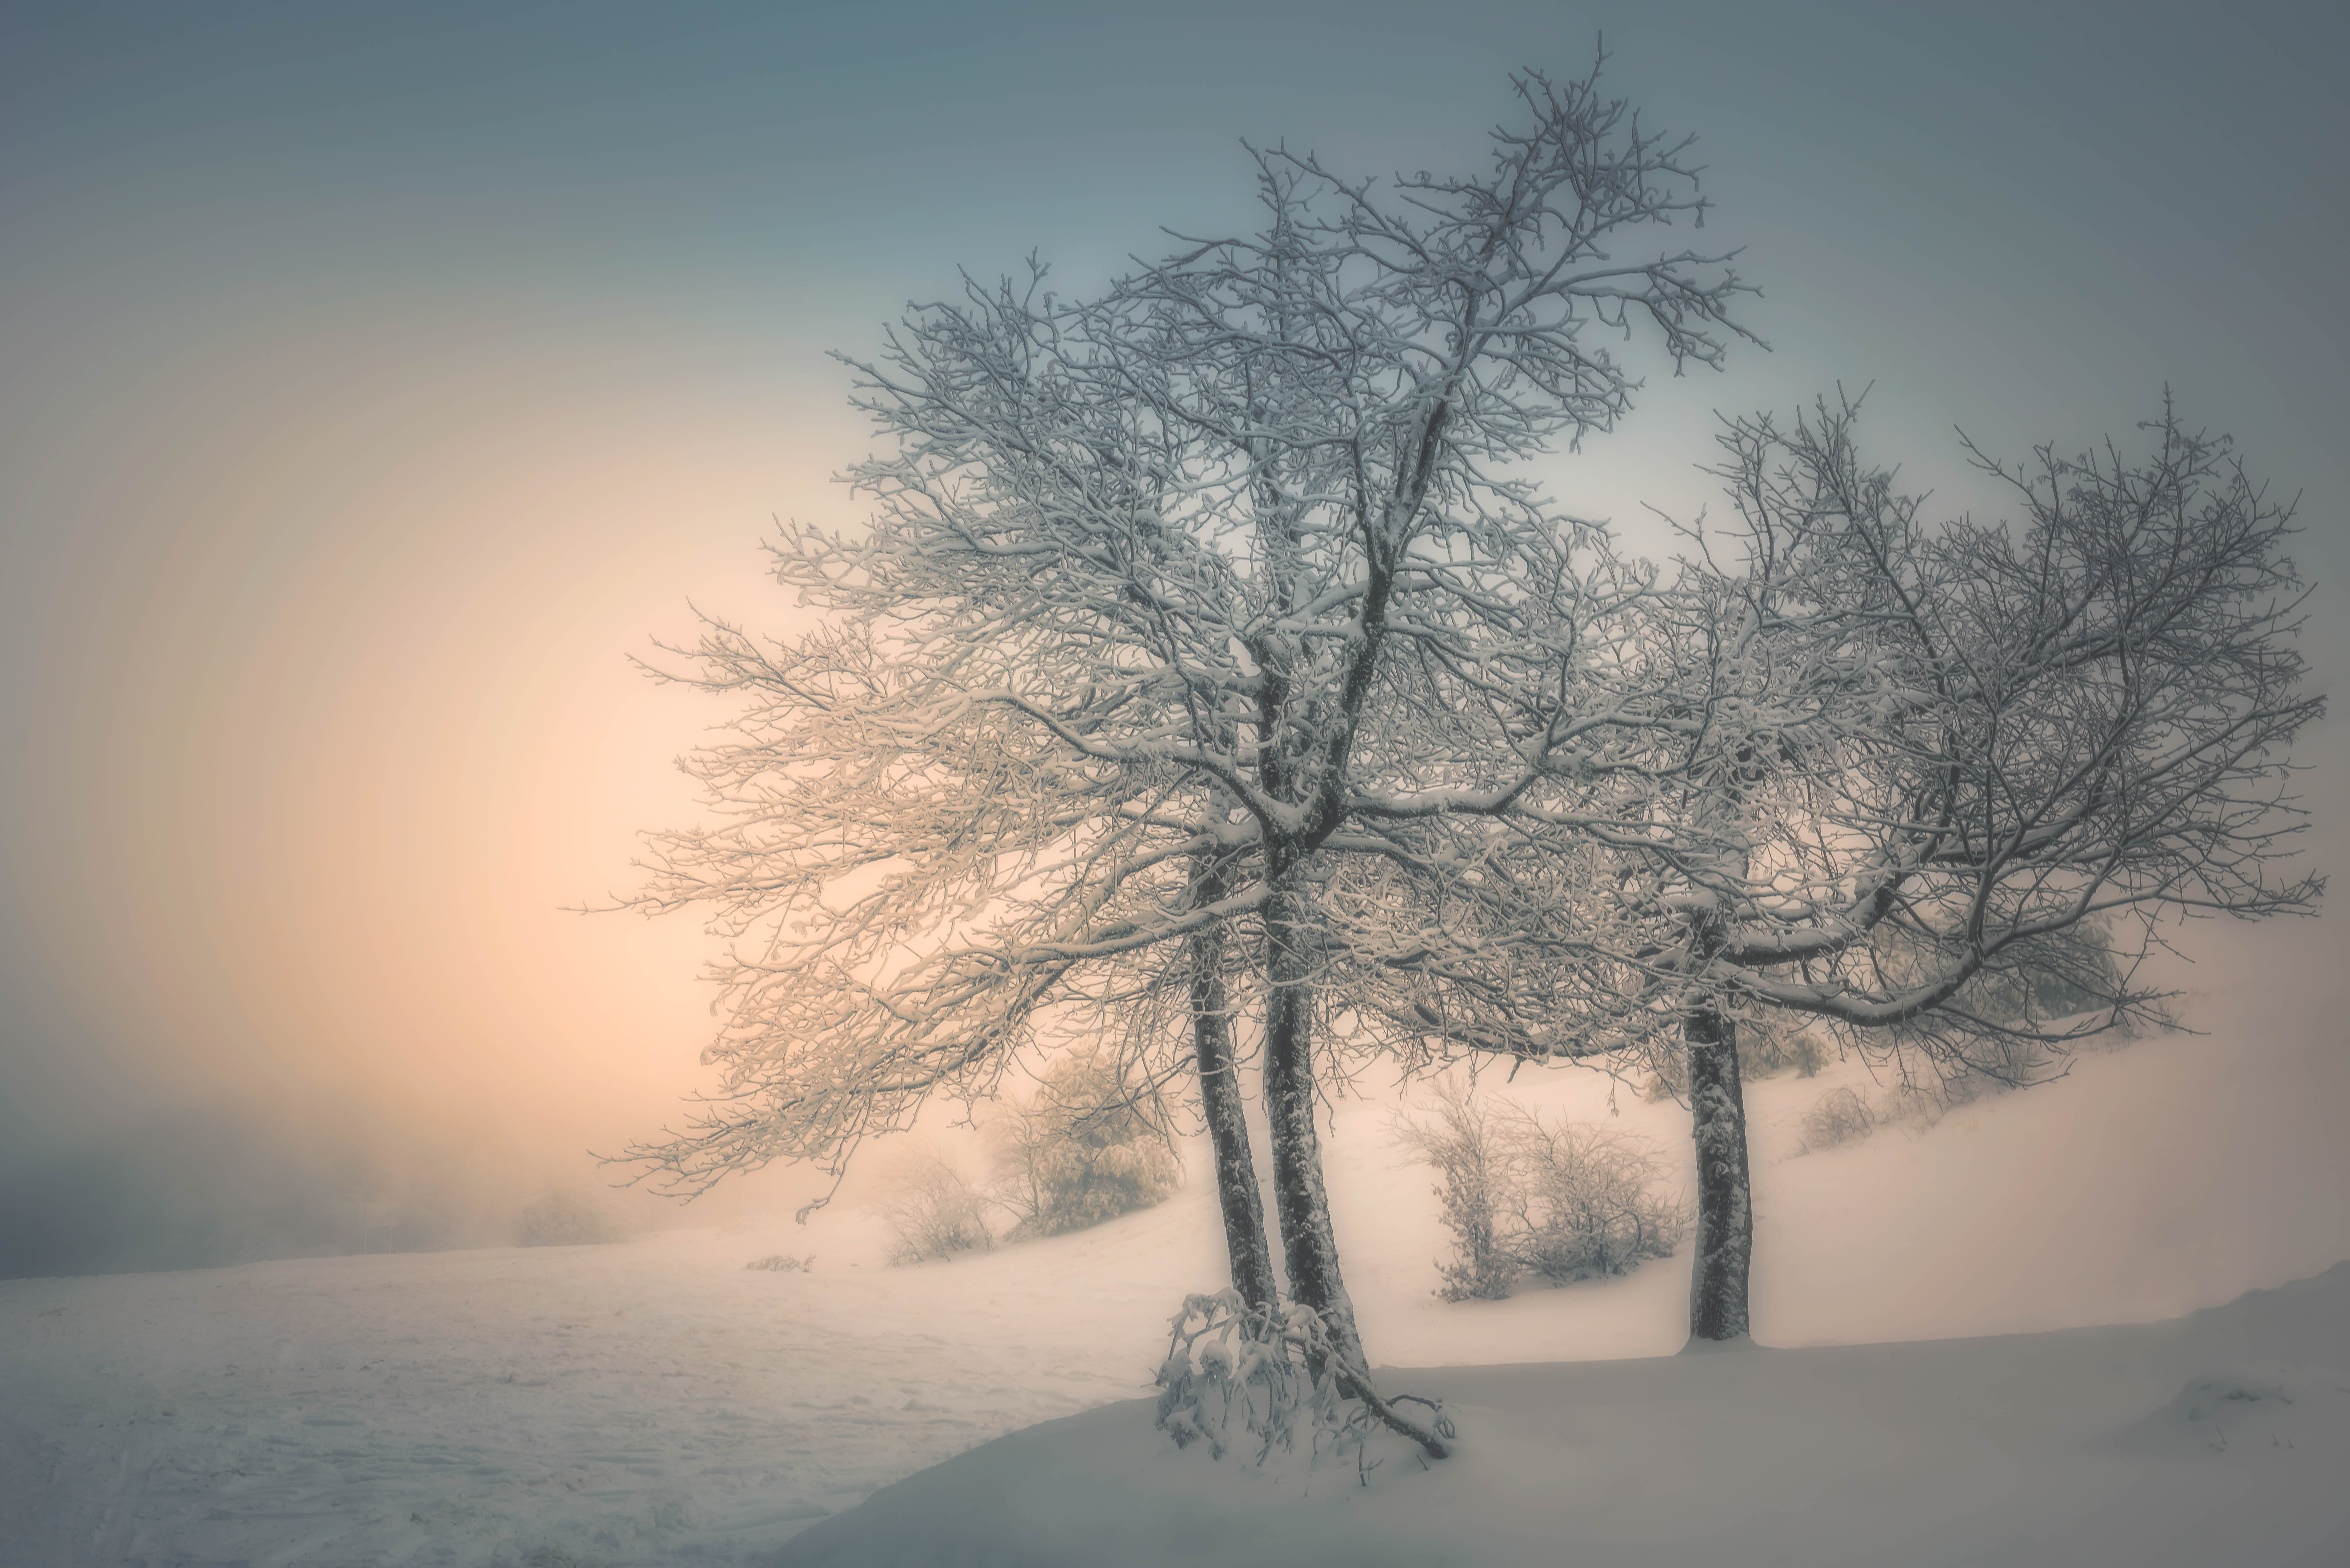 #landscape#nature#winter#fog#snow#sunrise#dream, Dimo Hristev